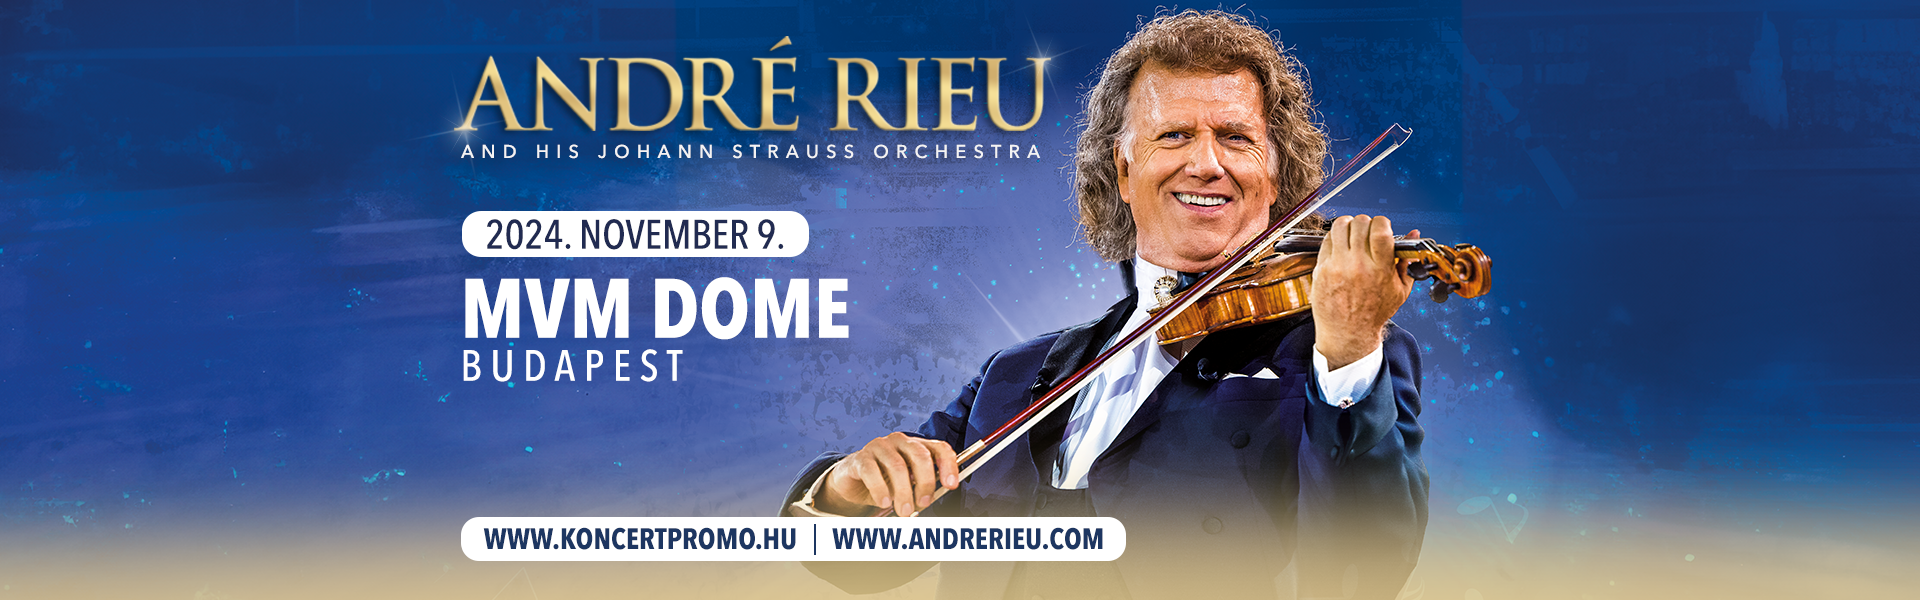 Sold Out: André Rieu Concert, MVM Dome Budapest, 9 November